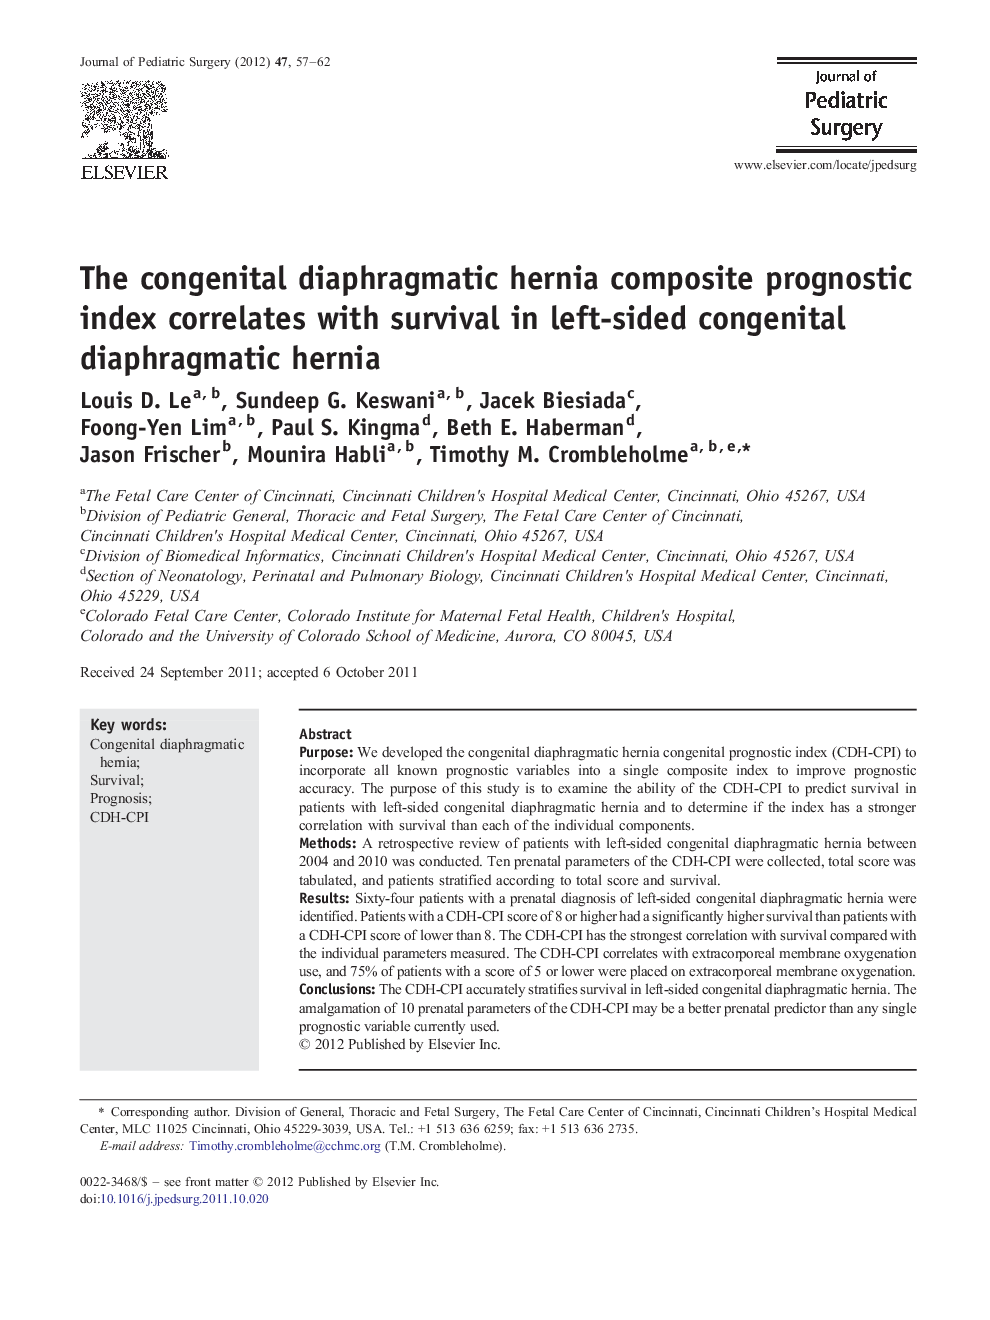 The congenital diaphragmatic hernia composite prognostic index correlates with survival in left-sided congenital diaphragmatic hernia